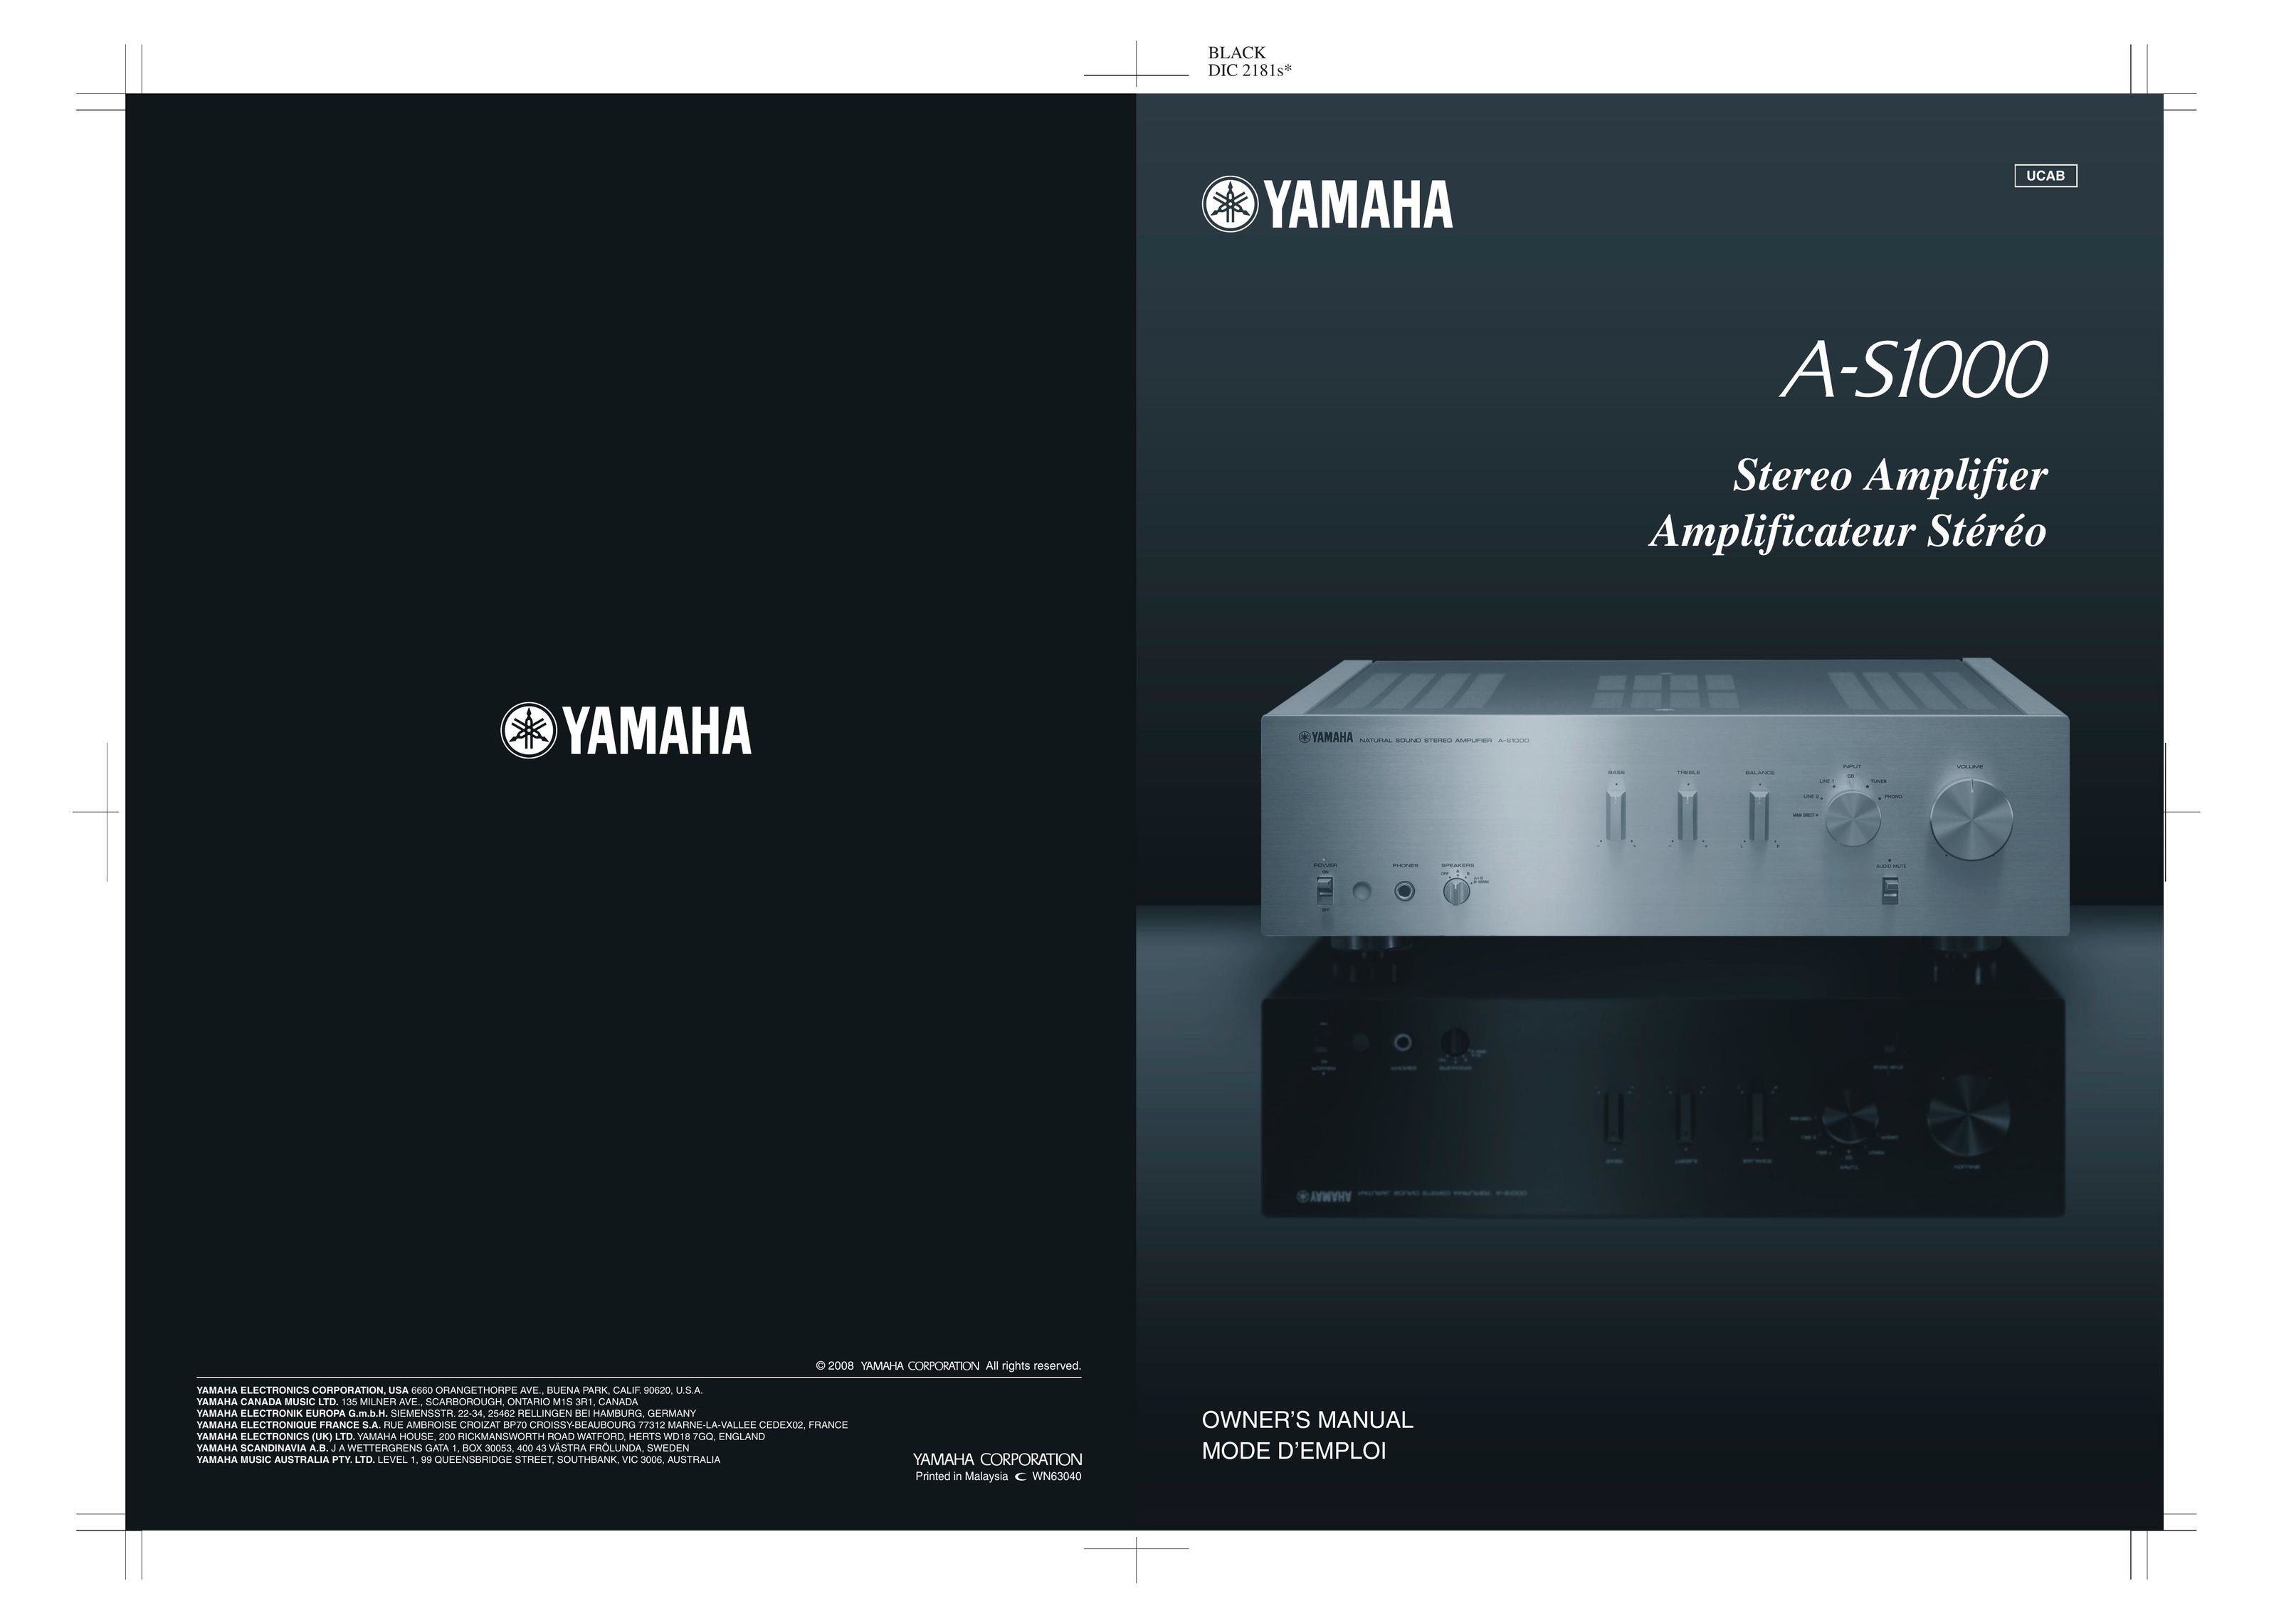 Yamaha A-S1000 Stereo Amplifier User Manual